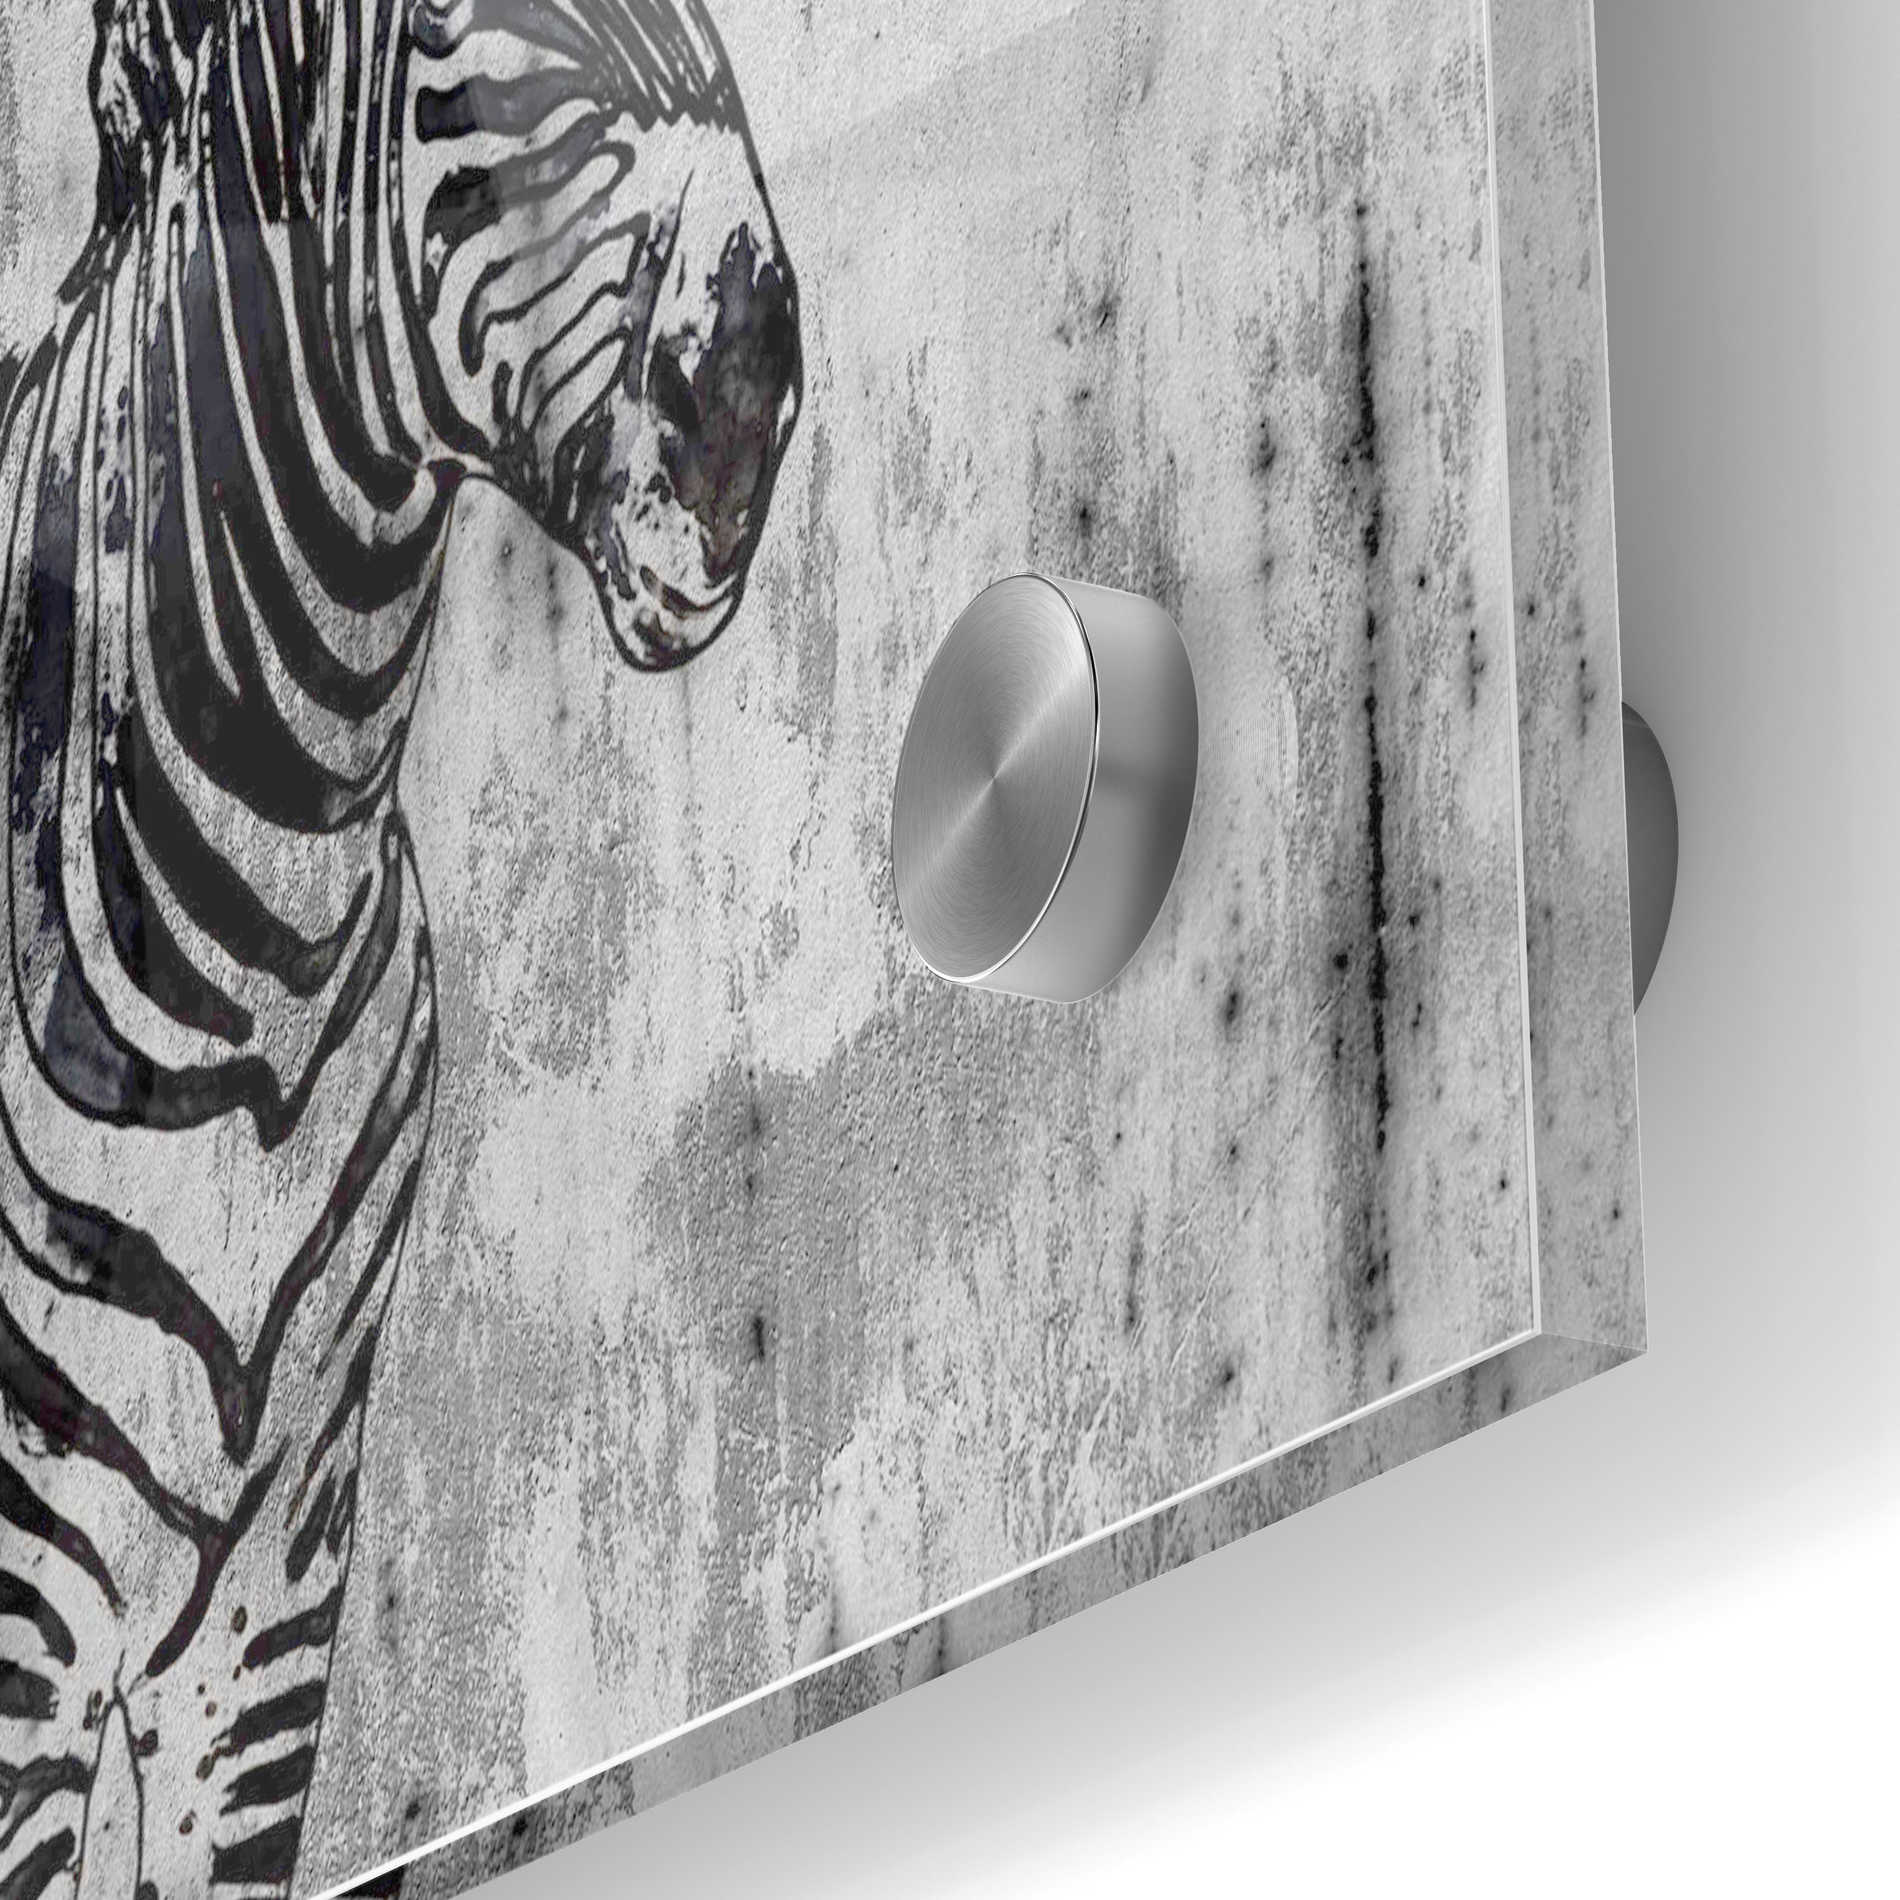 Epic Art 'Rustic Zebra 1' by Irena Orlov, Acrylic Glass Wall Art,24x36